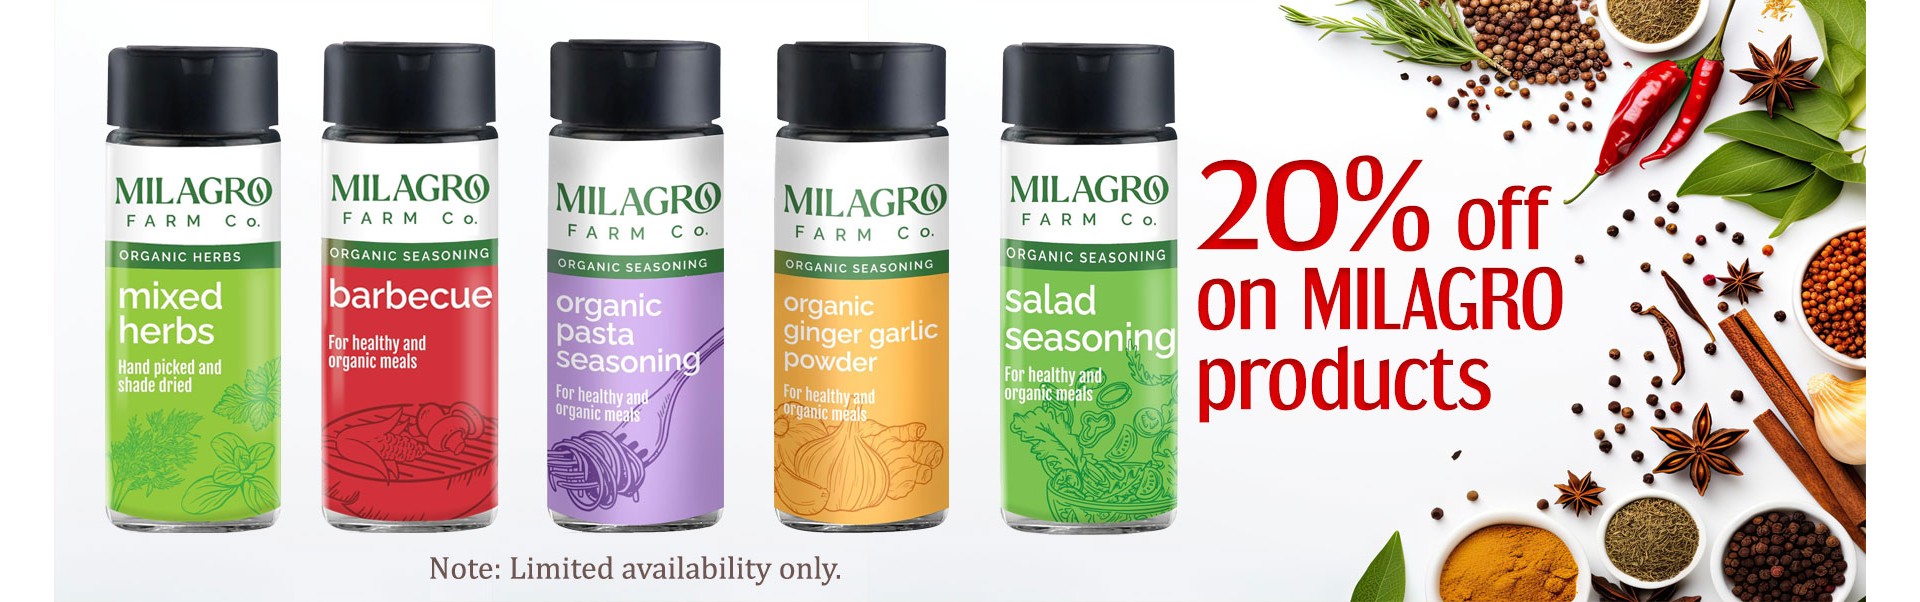 Milagro Spice powders and seasonings 20% off